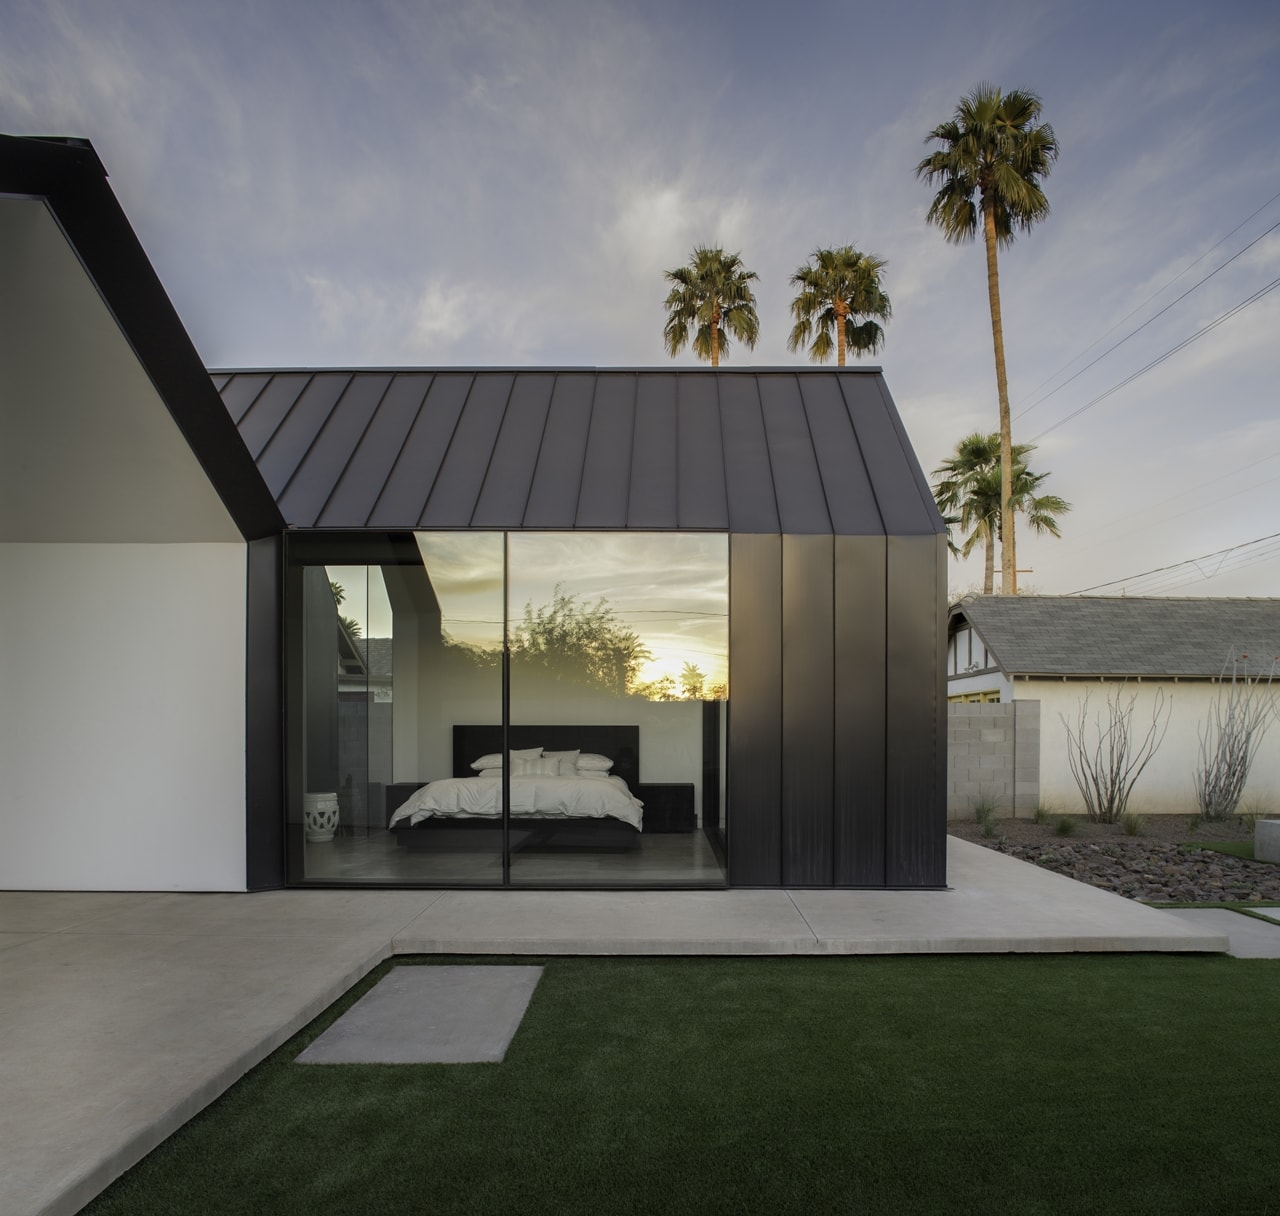 Simple exterior house design